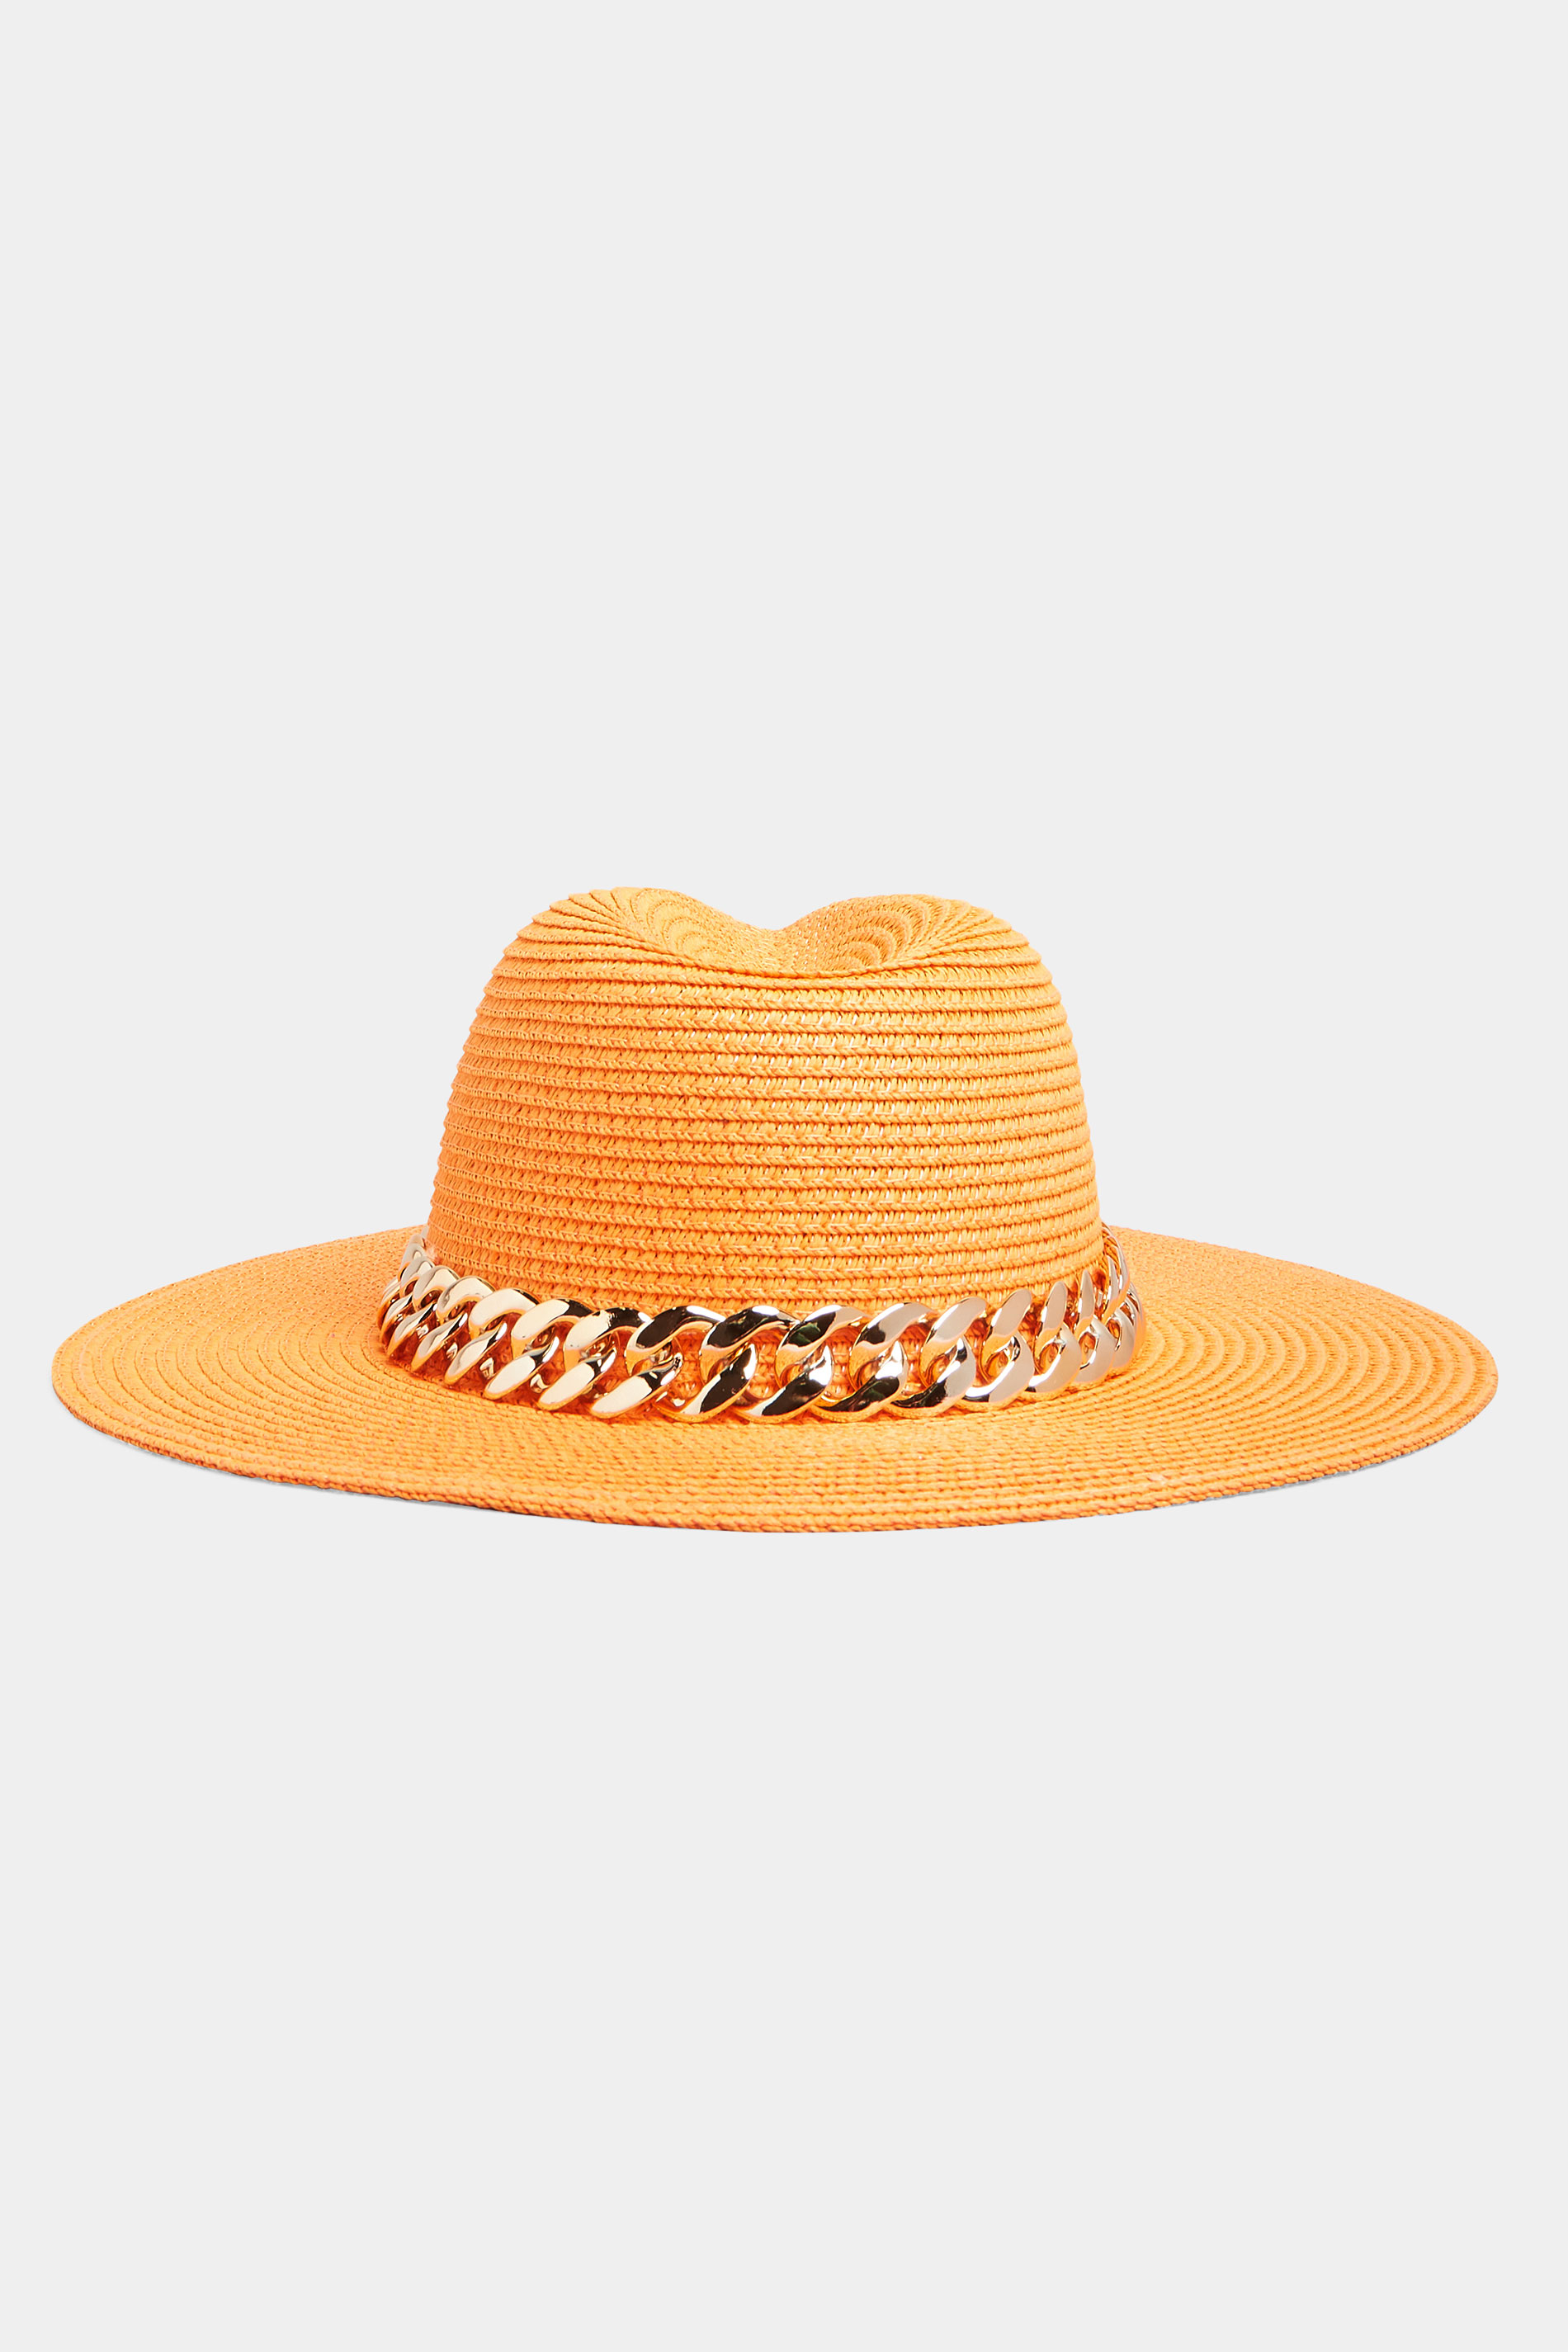 Bright Orange Straw Chain Fedora Hat | Yours Clothing  3